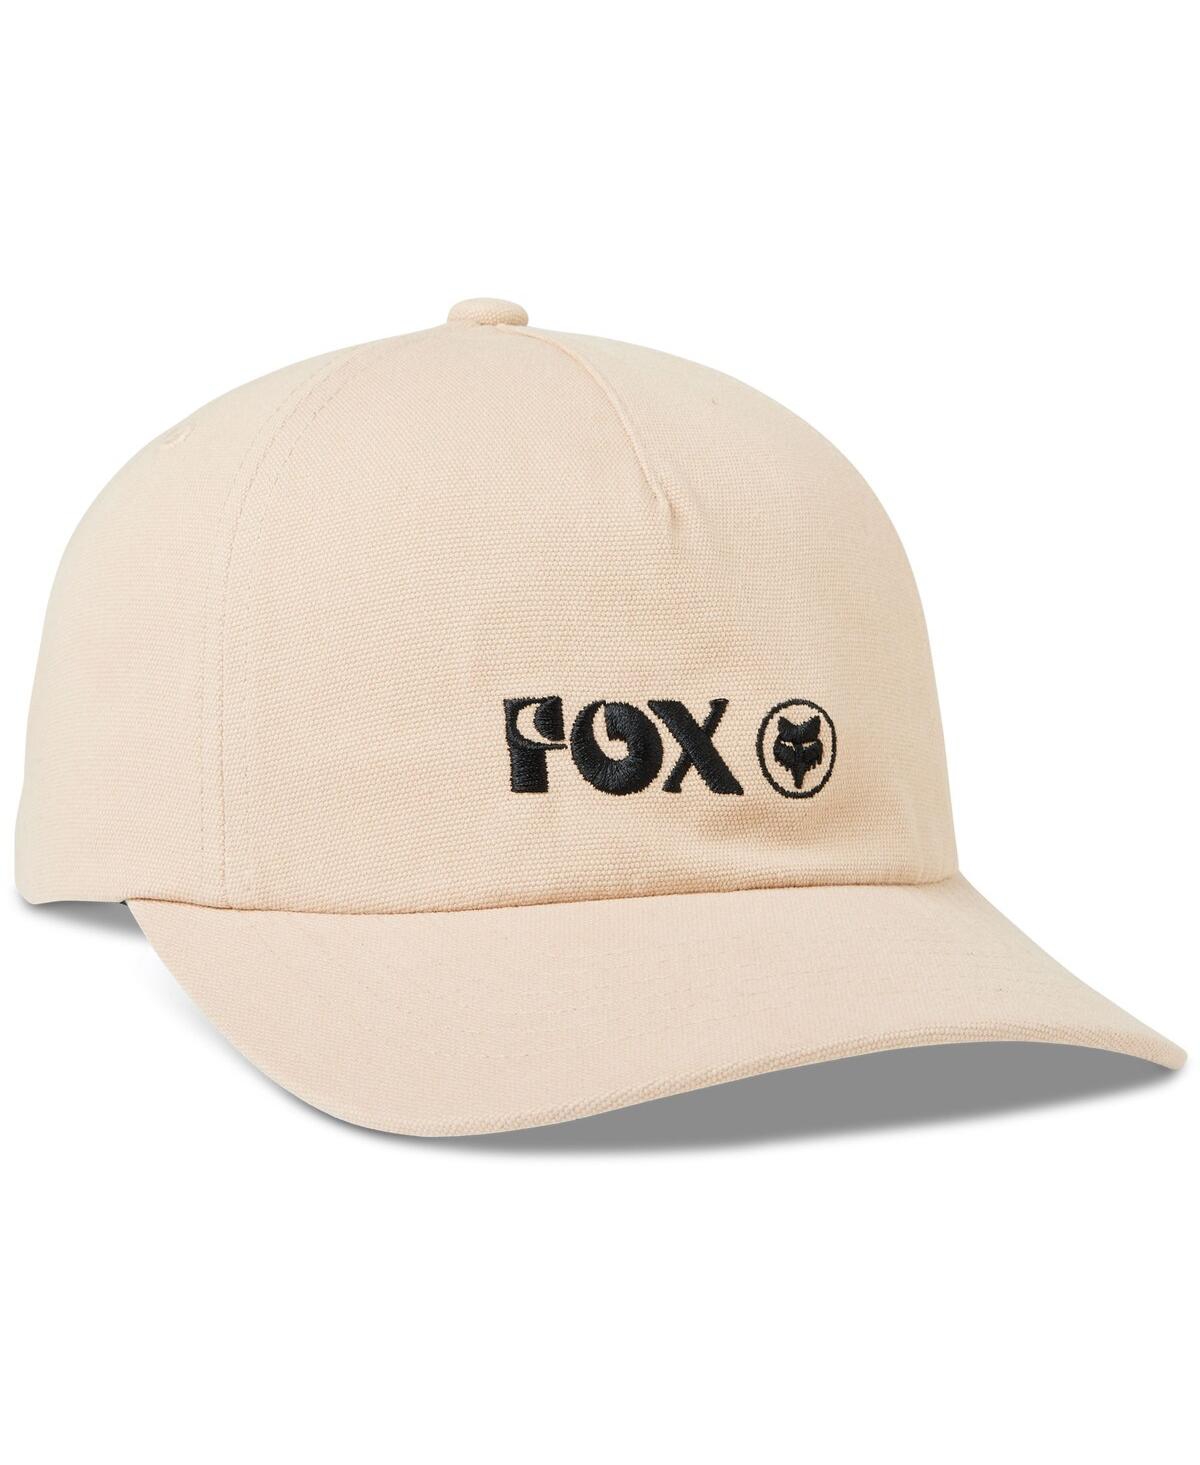 Women's Fox Tan Rockwilder Adjustable Hat - Tan